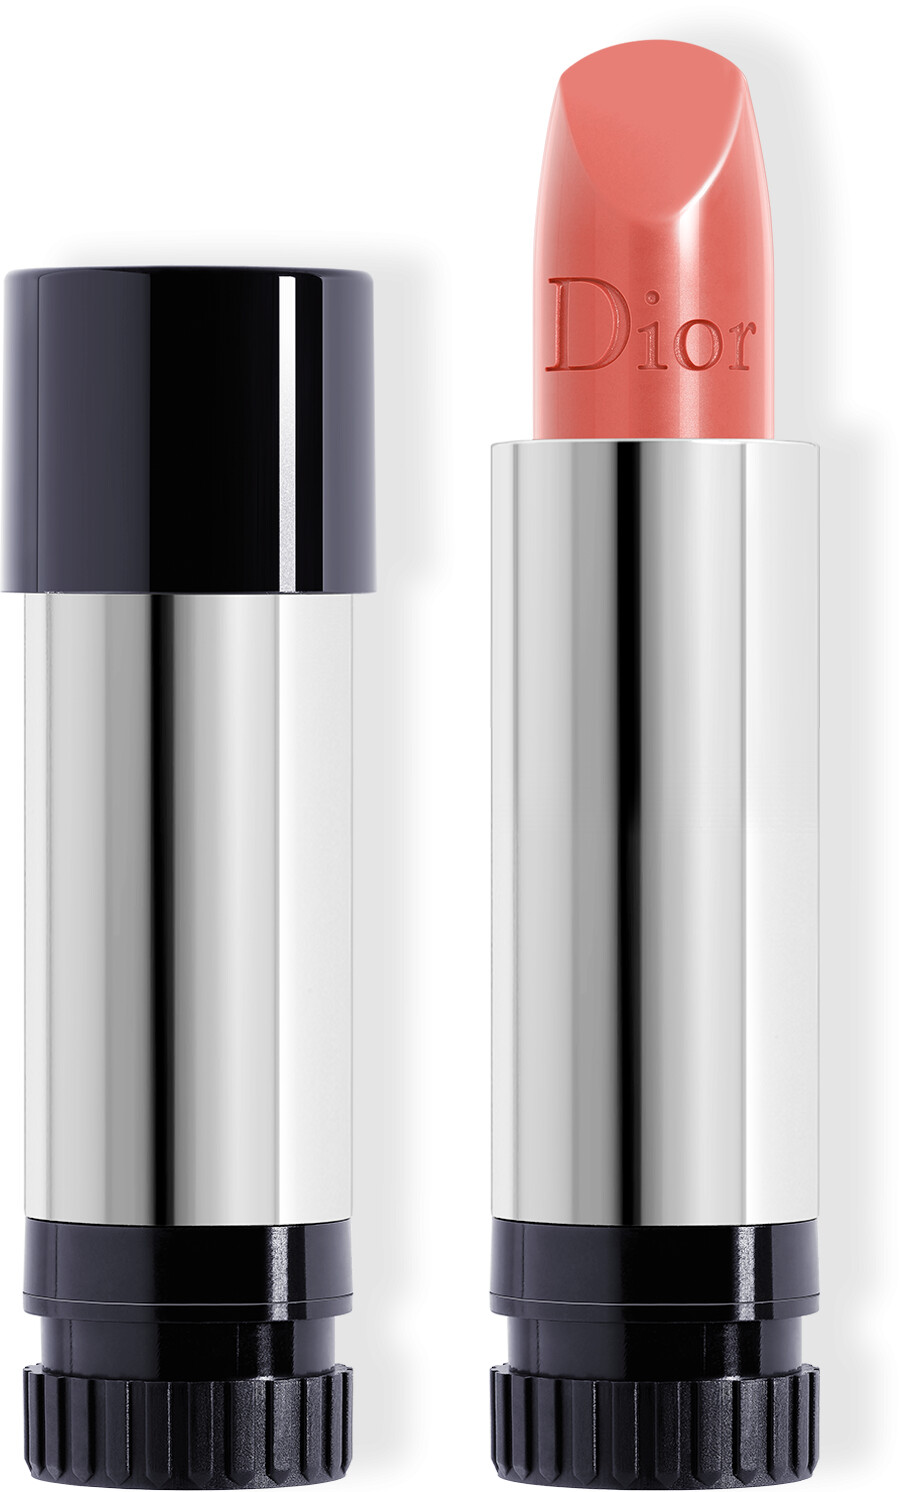 DIOR Rouge Dior Coloured Lip Balm Refill 3.5g 772 - Classic - Satin